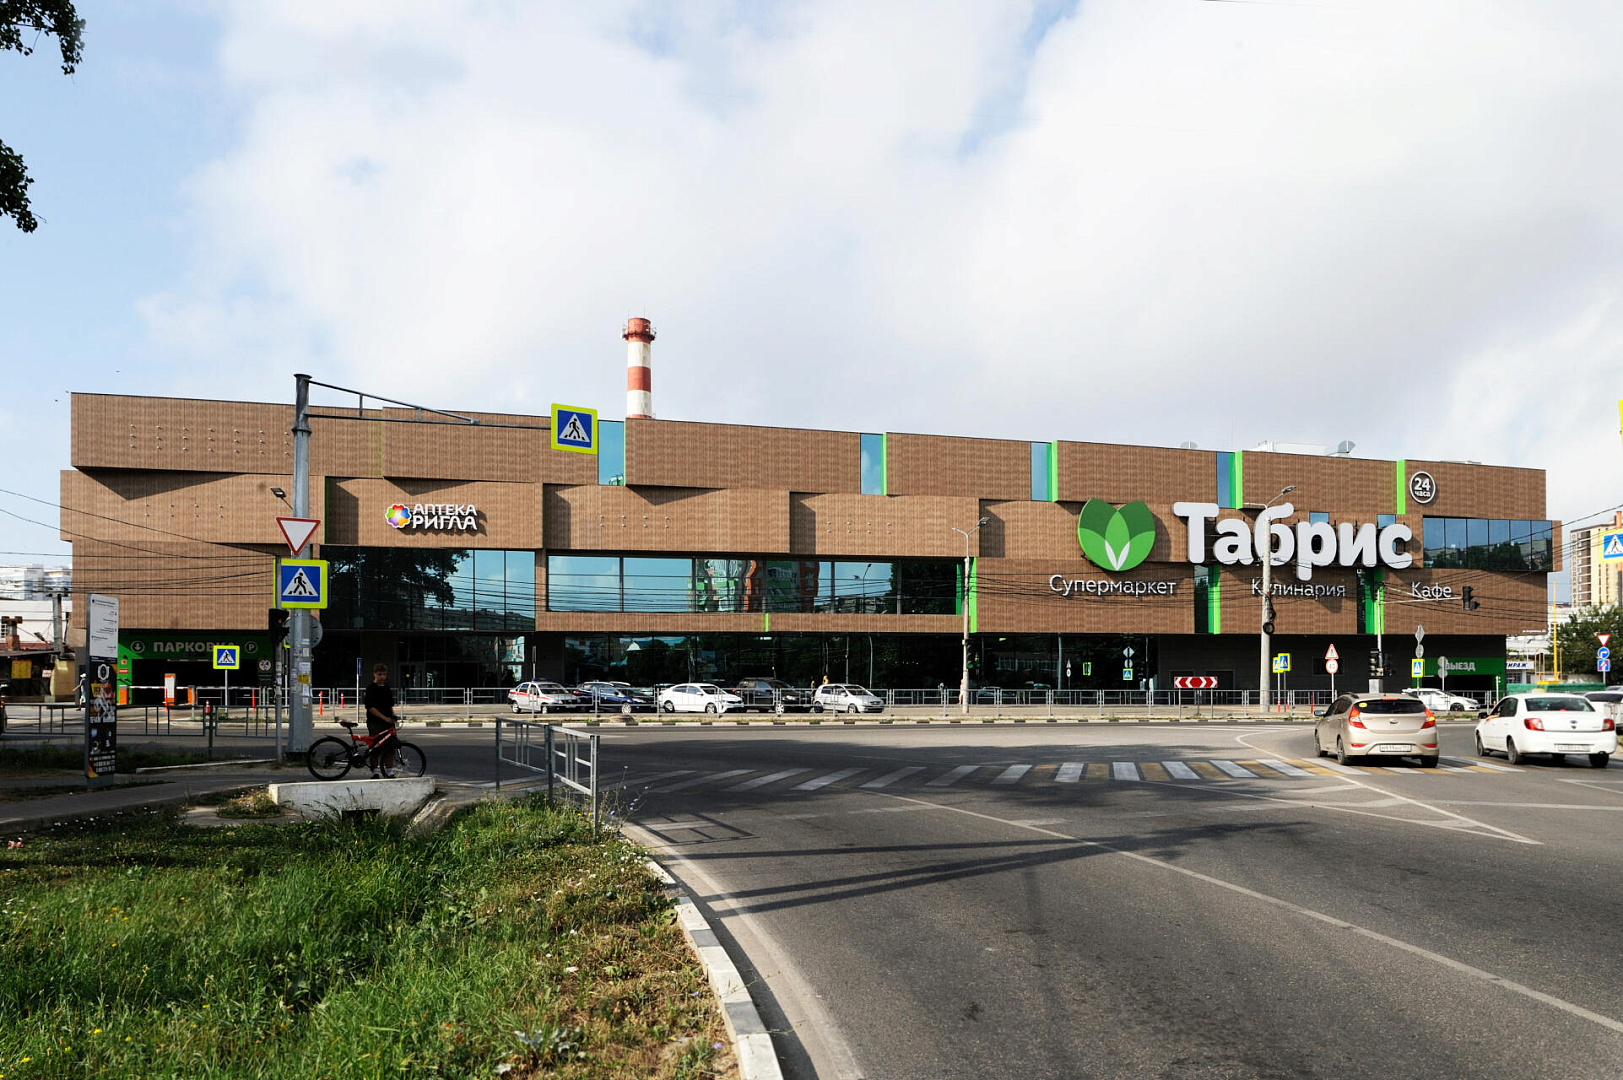 Торговый центр Табрис, архитектура торгового центра